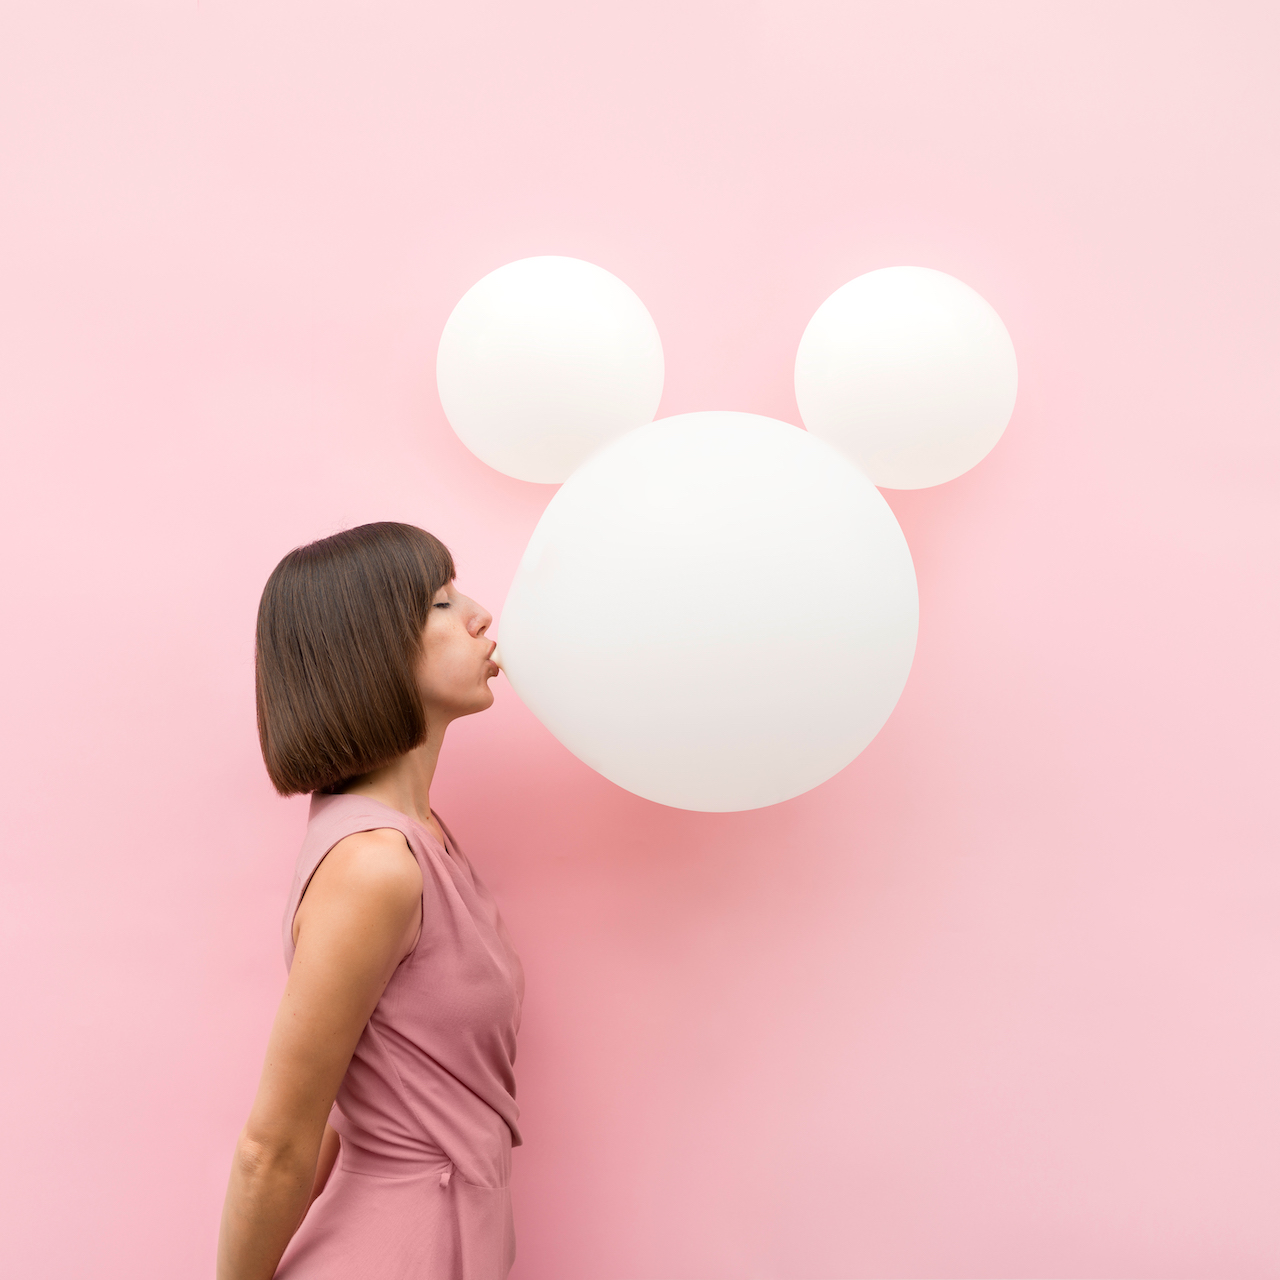 Annandaniel DrCuerda Anniset Instagram Creative Influencer Campaign Disney Mickey Mouse 90 Anniversary Pink Gum Balloon Bubble